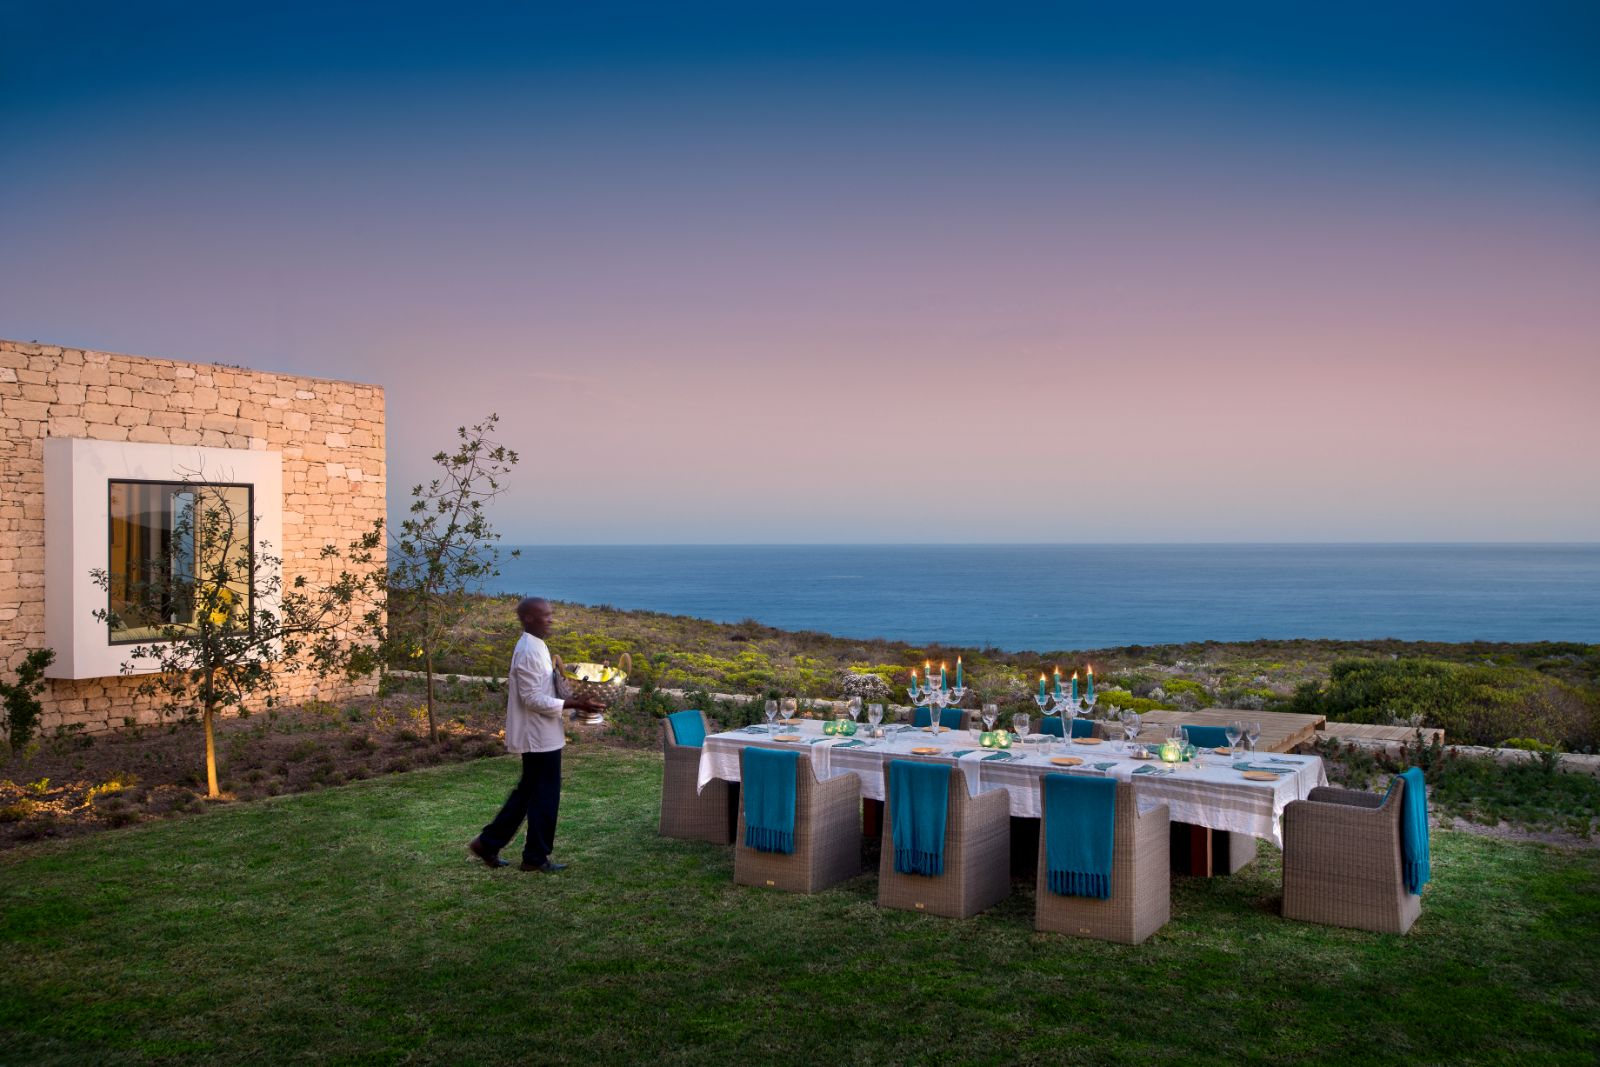 Alfresco dining on the grounds of Morukuru Ocean House in South Africa